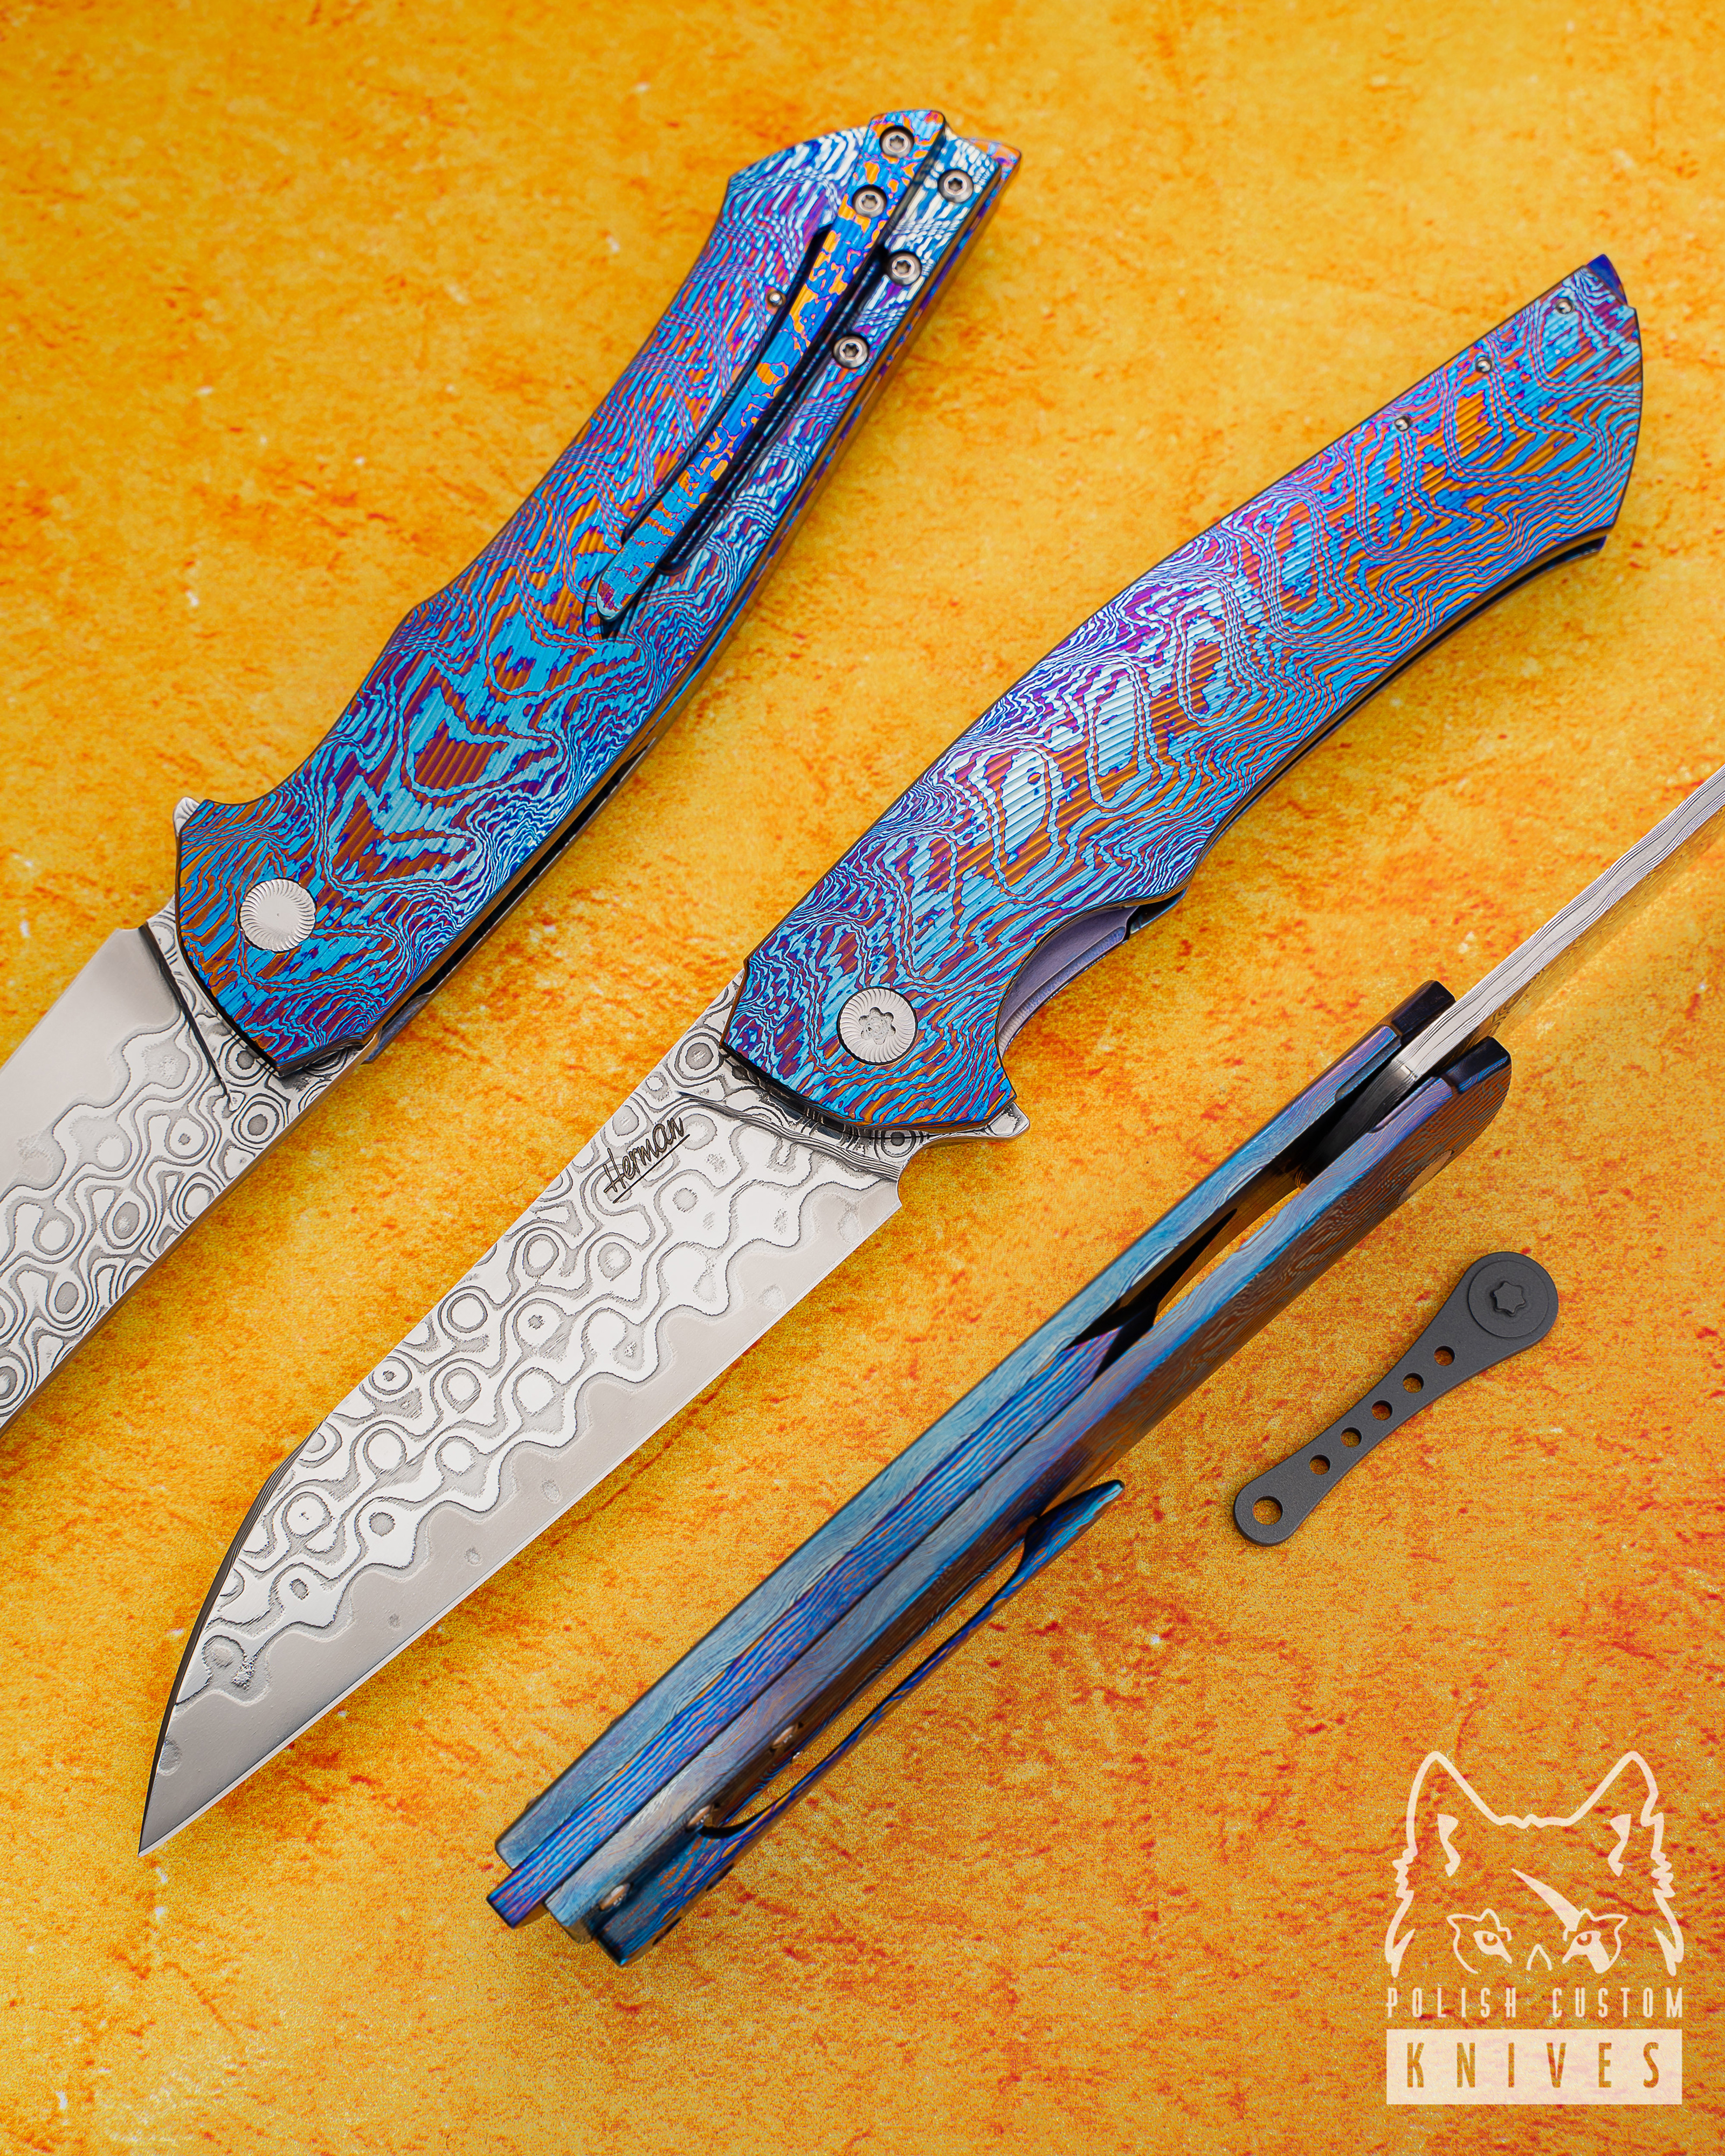 /imgs/knives/ceramic-knives/Benchma